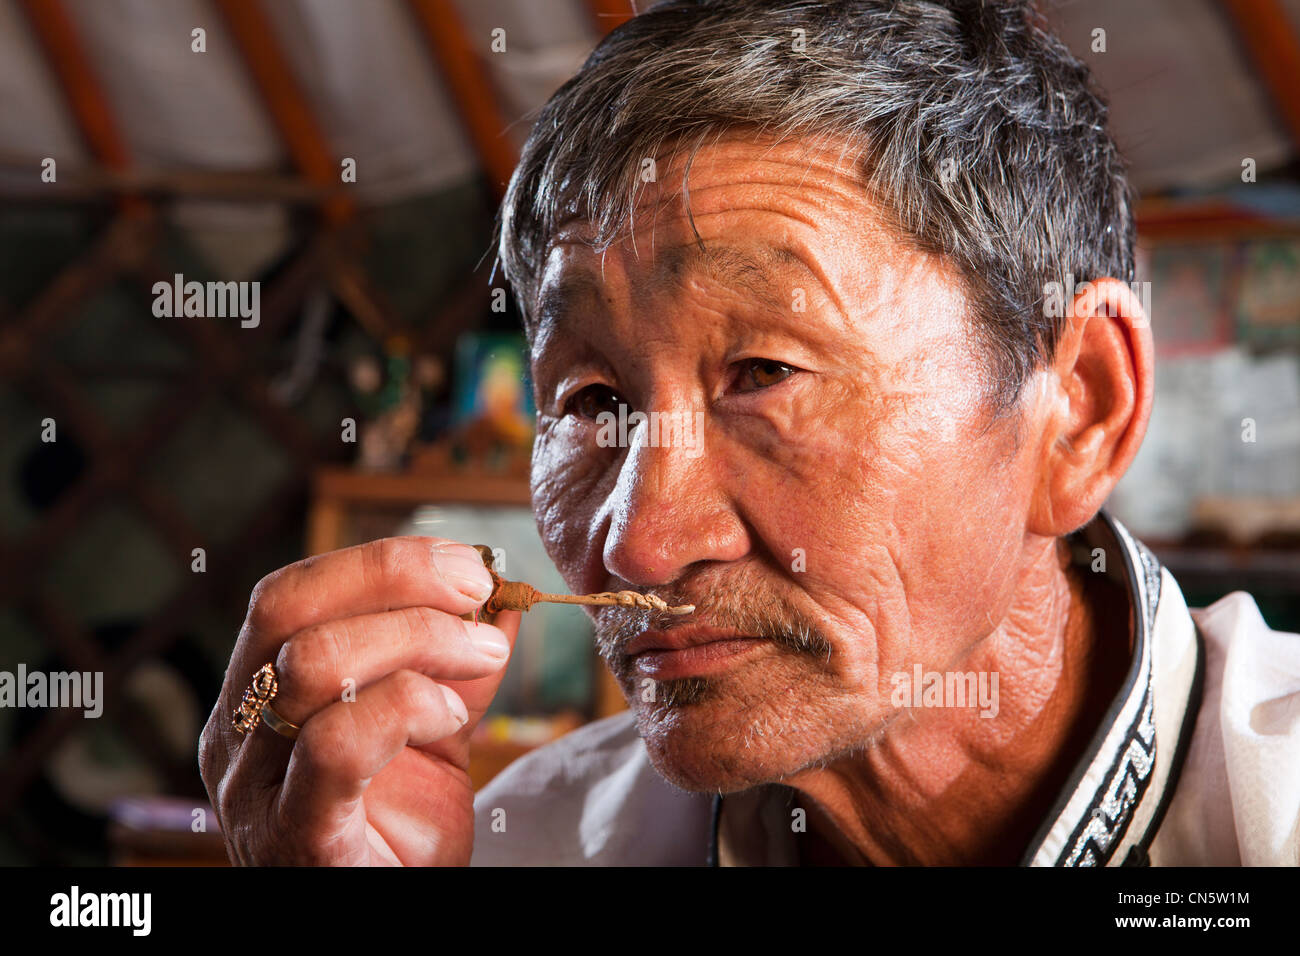 mongolian-man-smelling-traditional-aroma